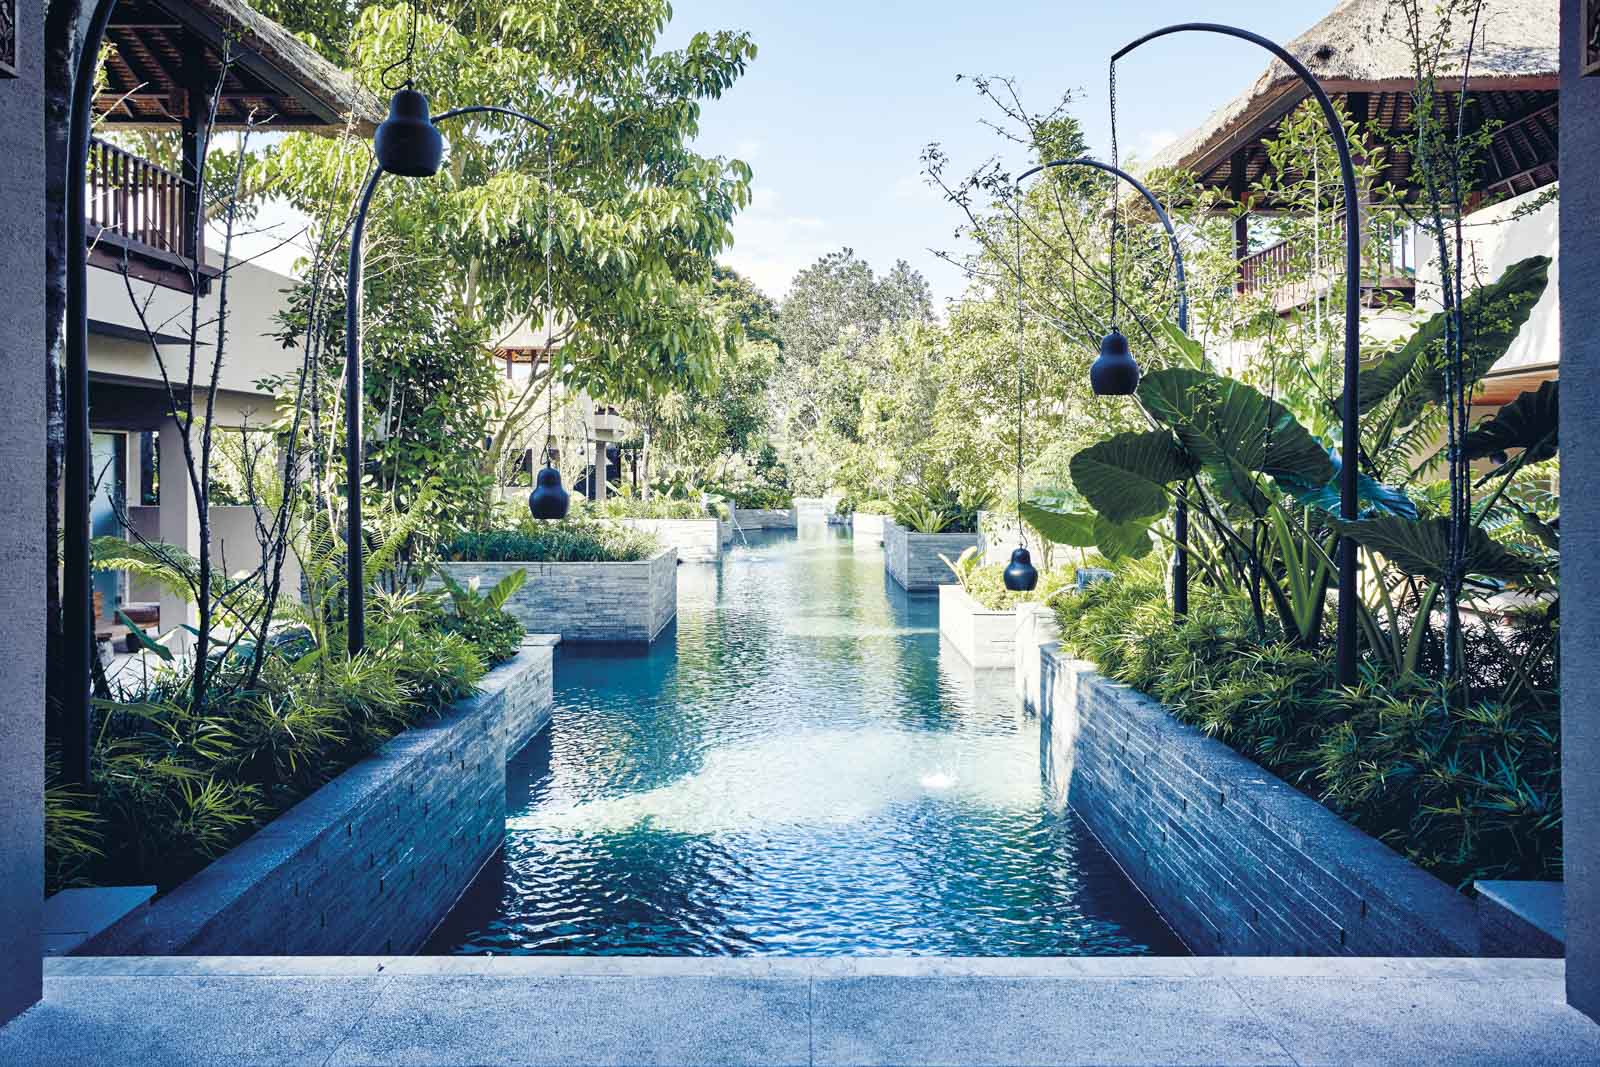 Hoshinoya Bali jungle hotel in Indonesia